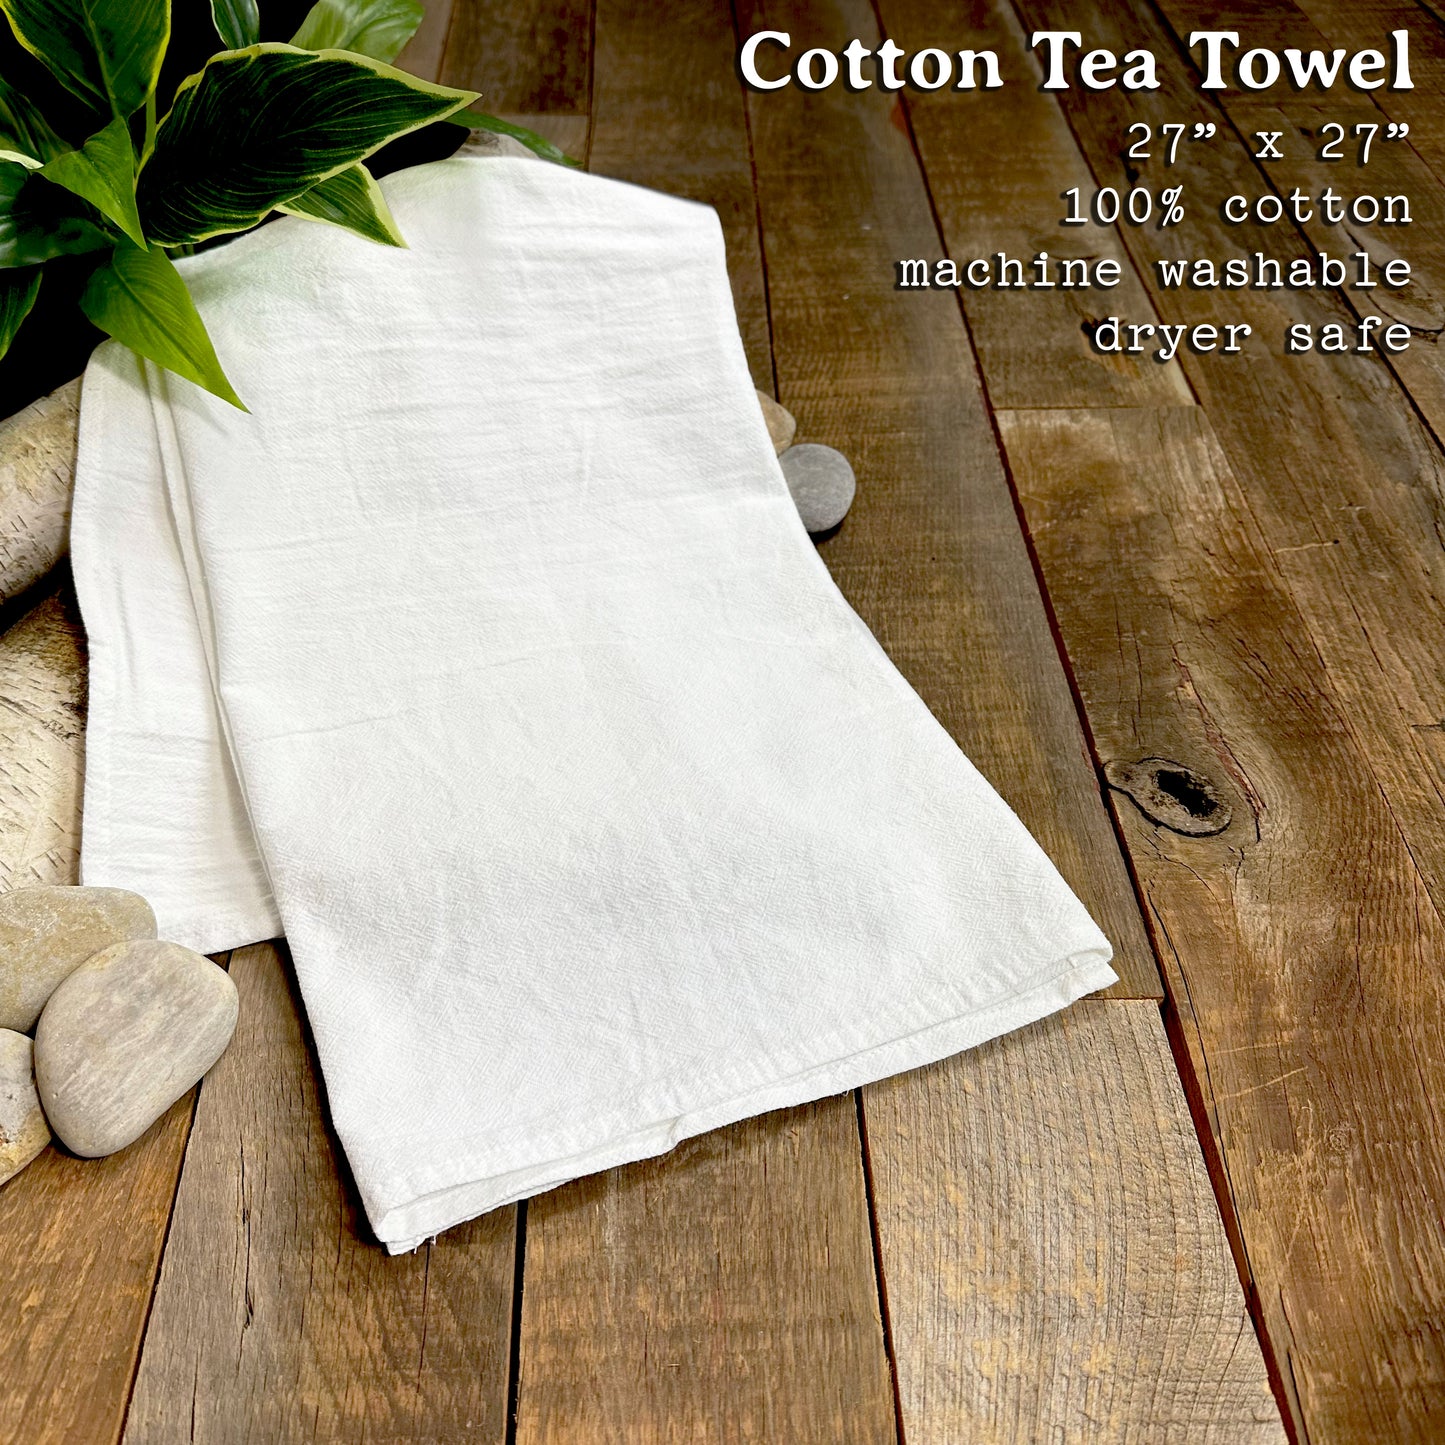 Get Lost Lantern w/ City, State - Cotton Tea Towel